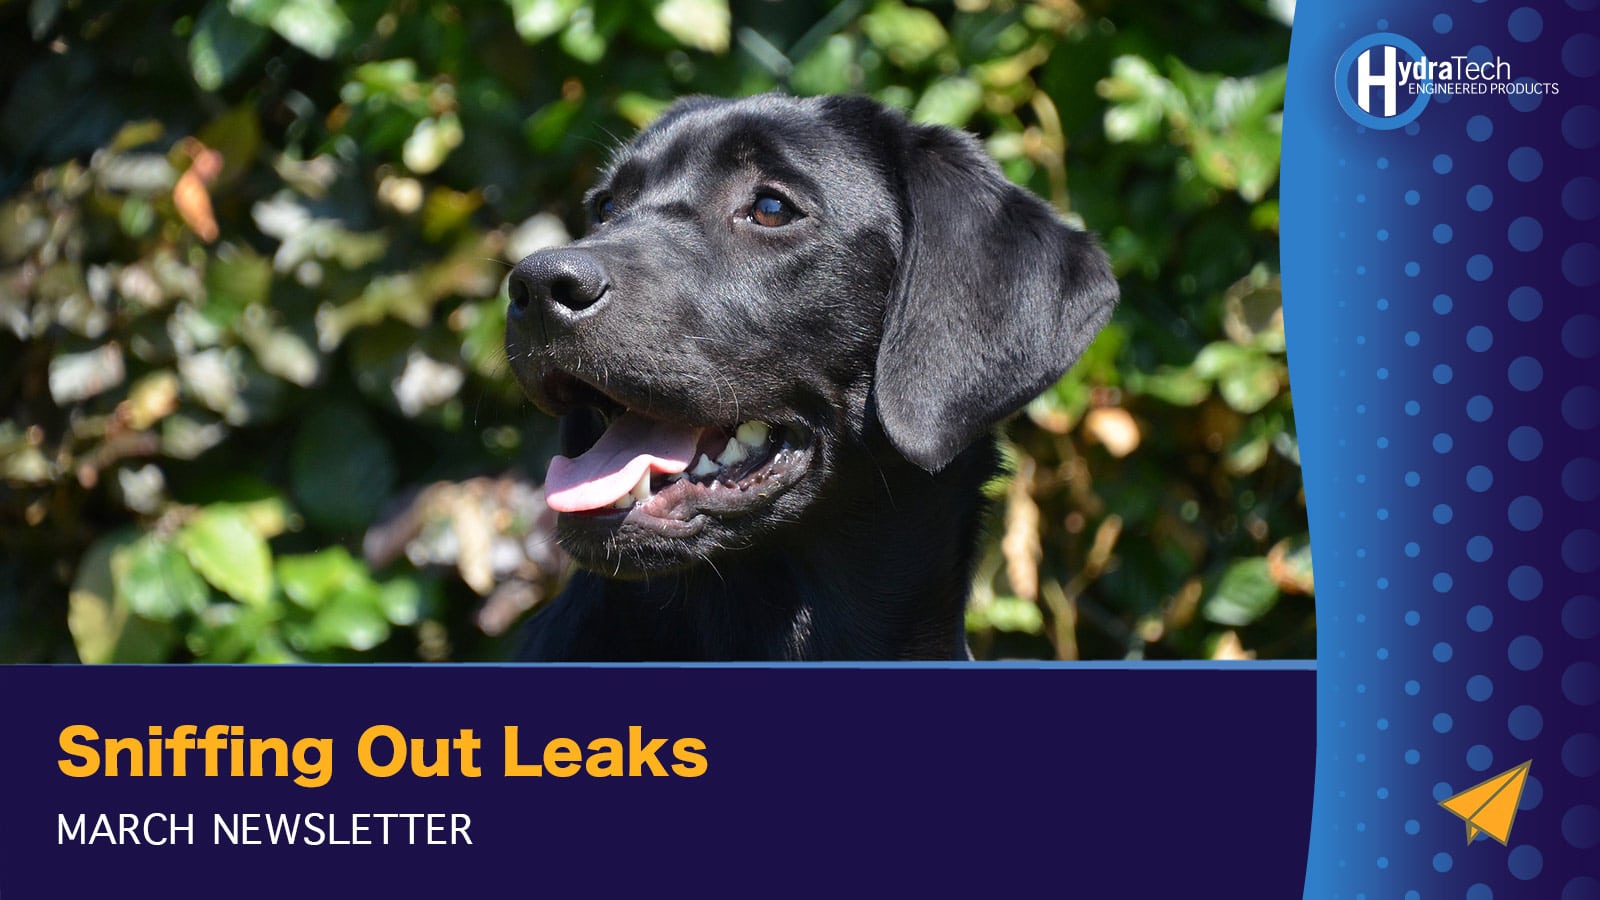 Teaser Image of a black dog, 'Sniffing Out Leaks, March Newsletter'